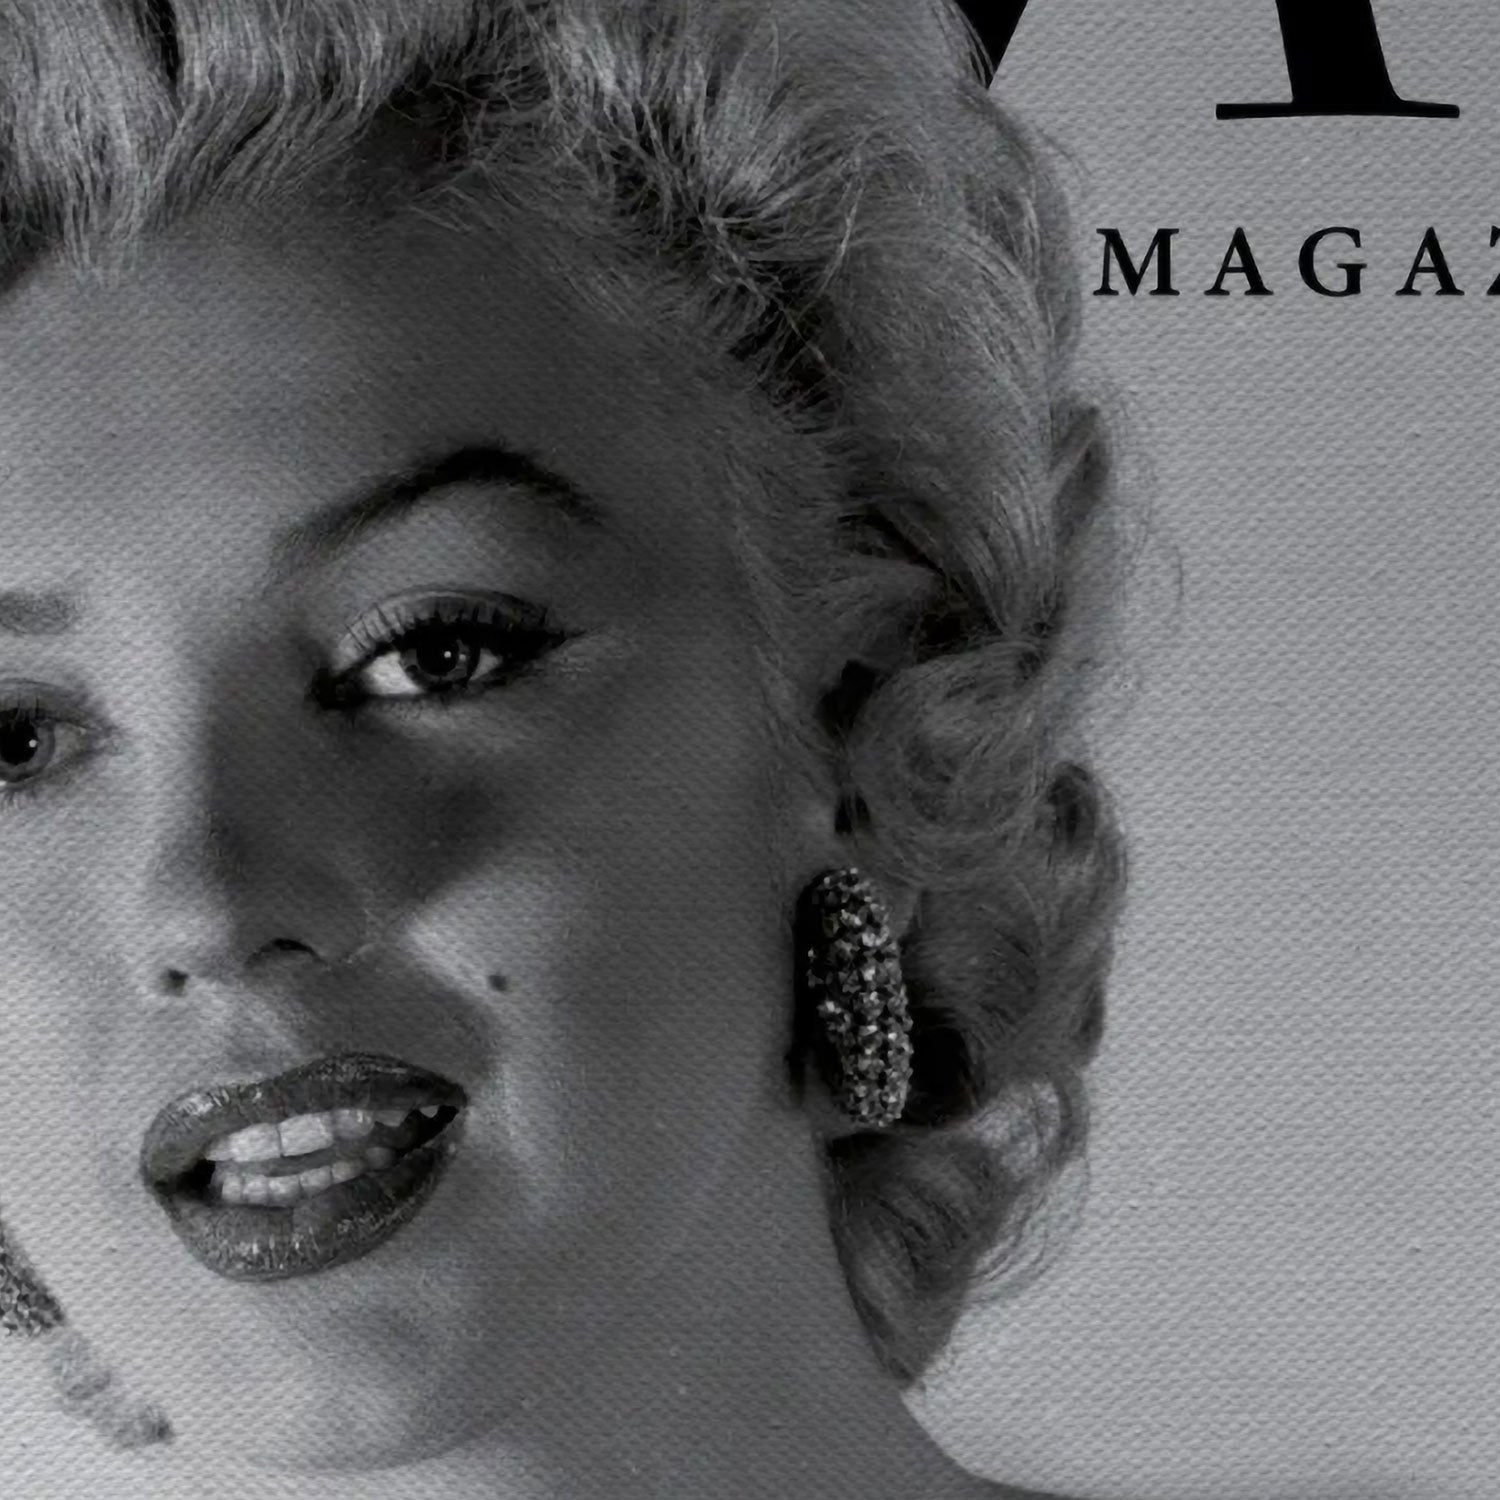 Marilyn Monroe Magazine Cover Wall Art Canvas